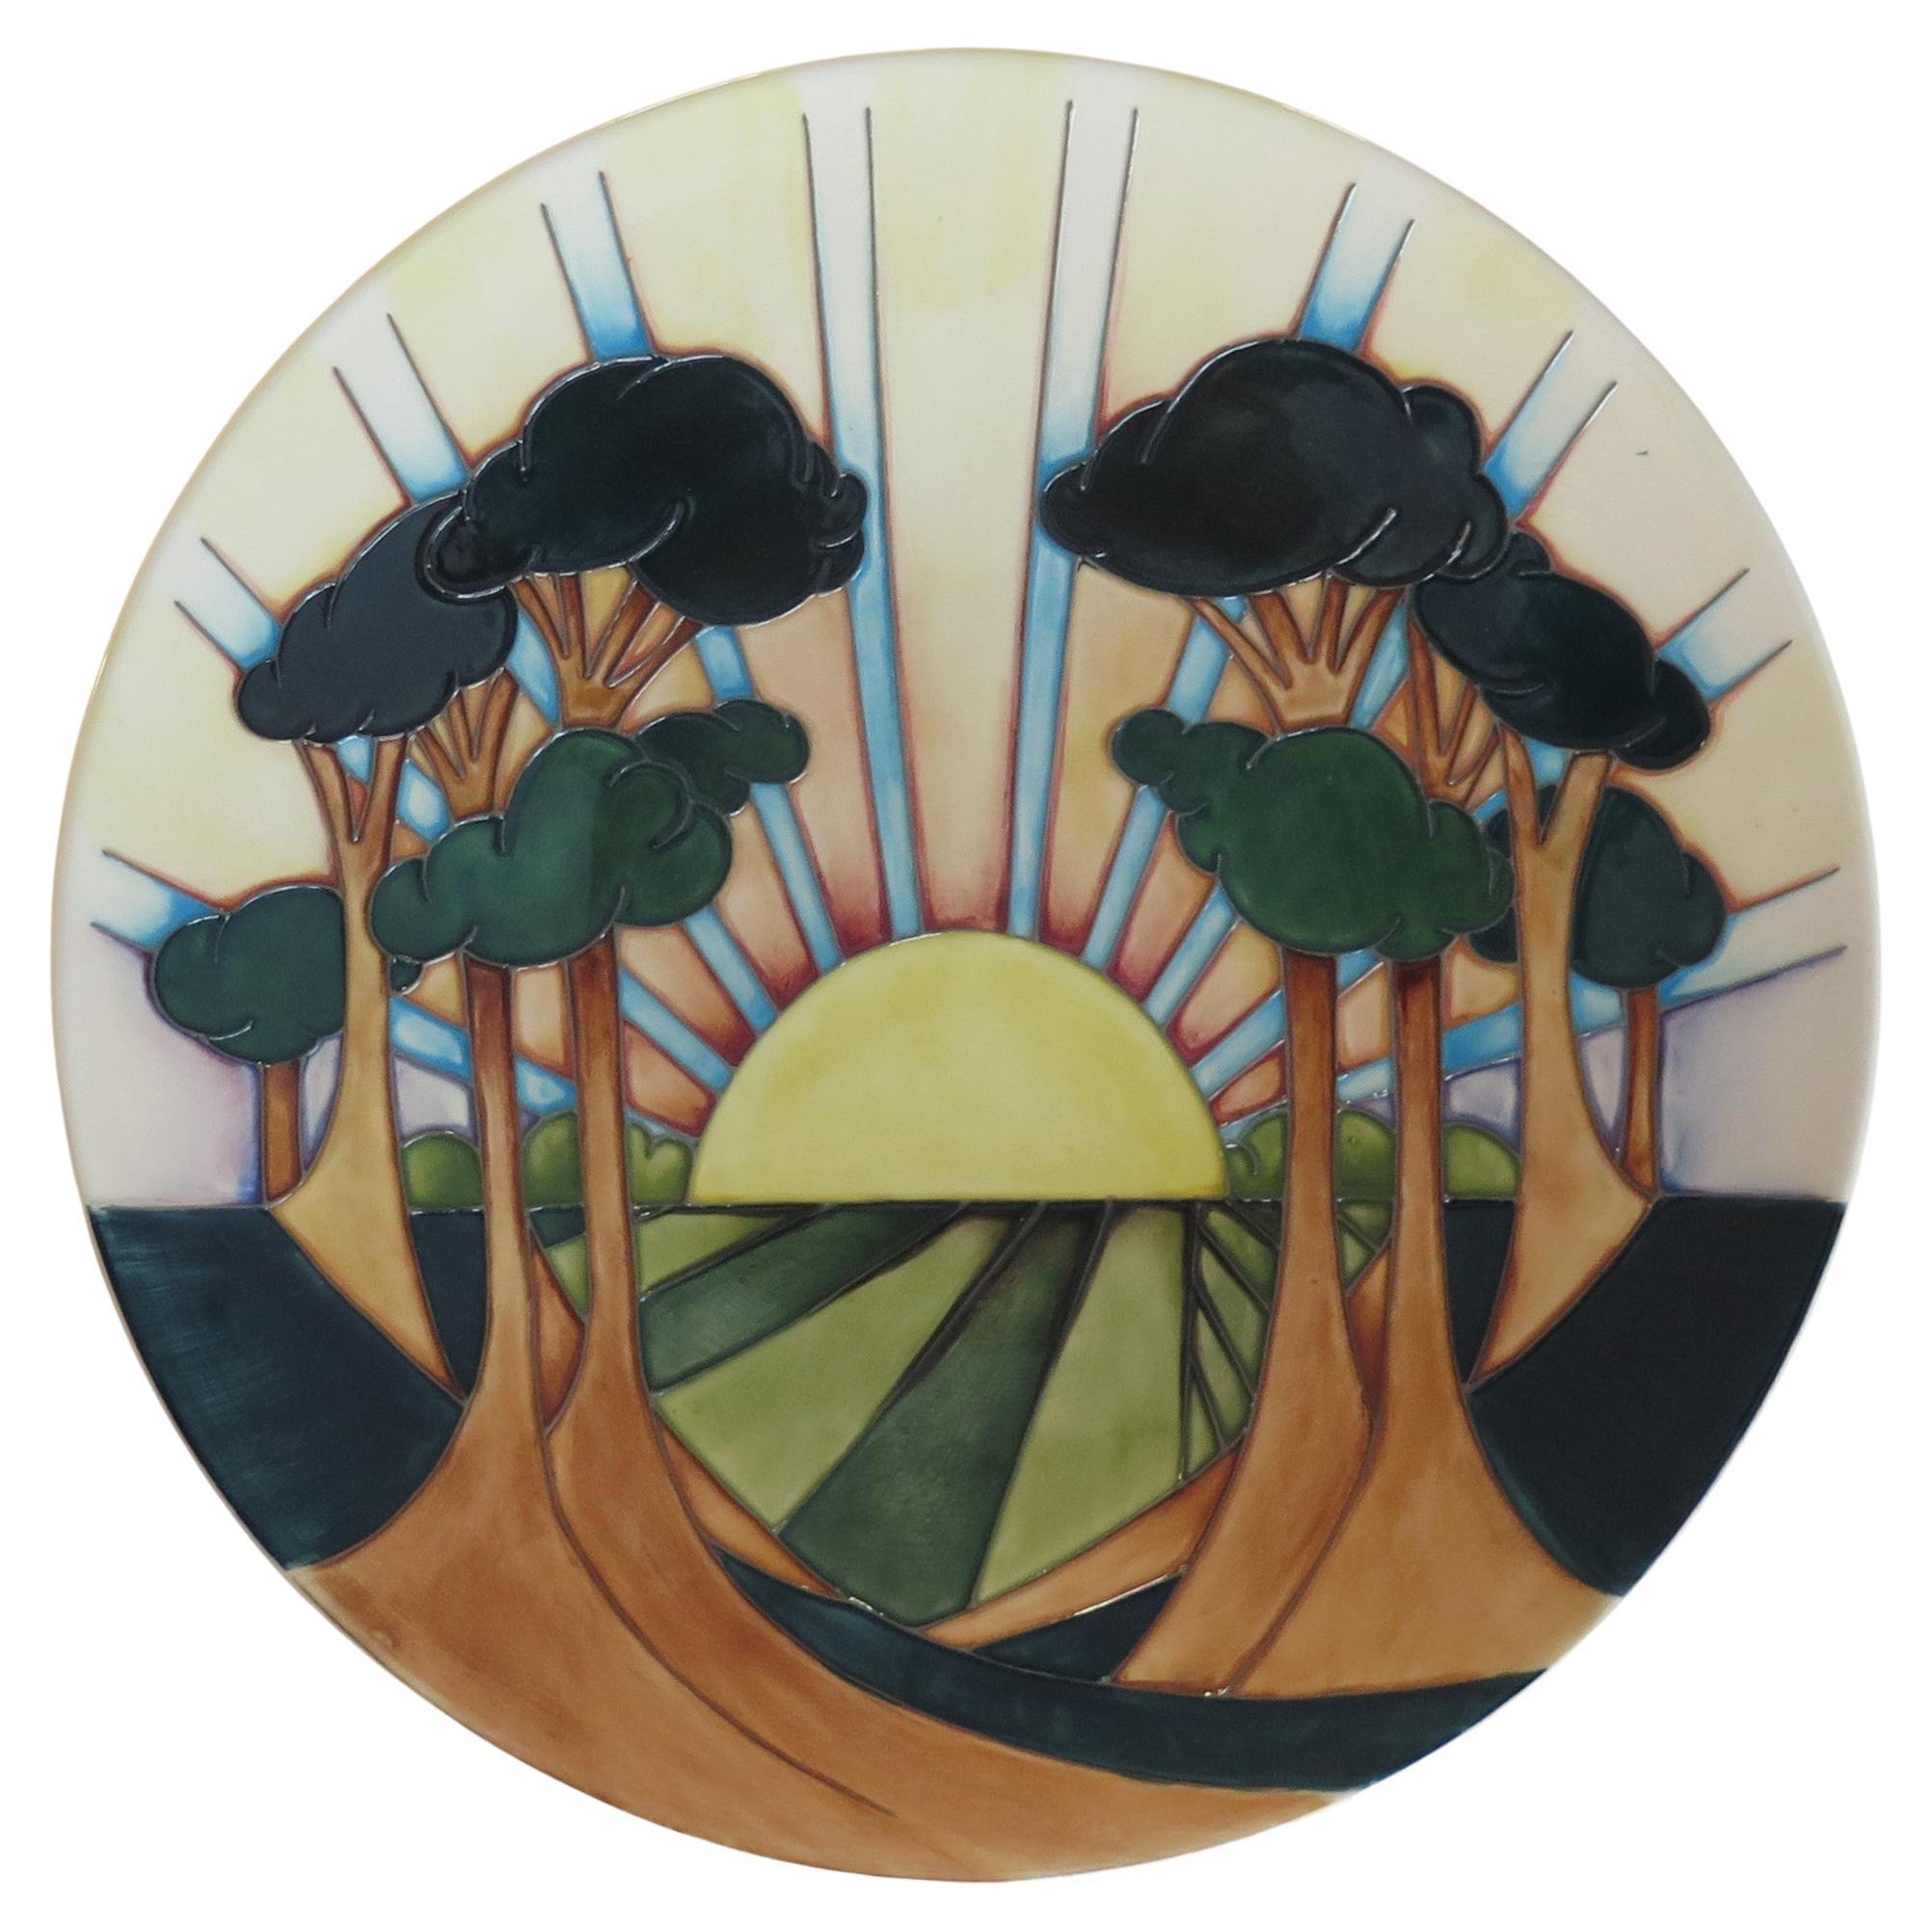 Moorcroft Pottery Trial Plate in Daybreak Pattern by Nicola Slaney, 2017